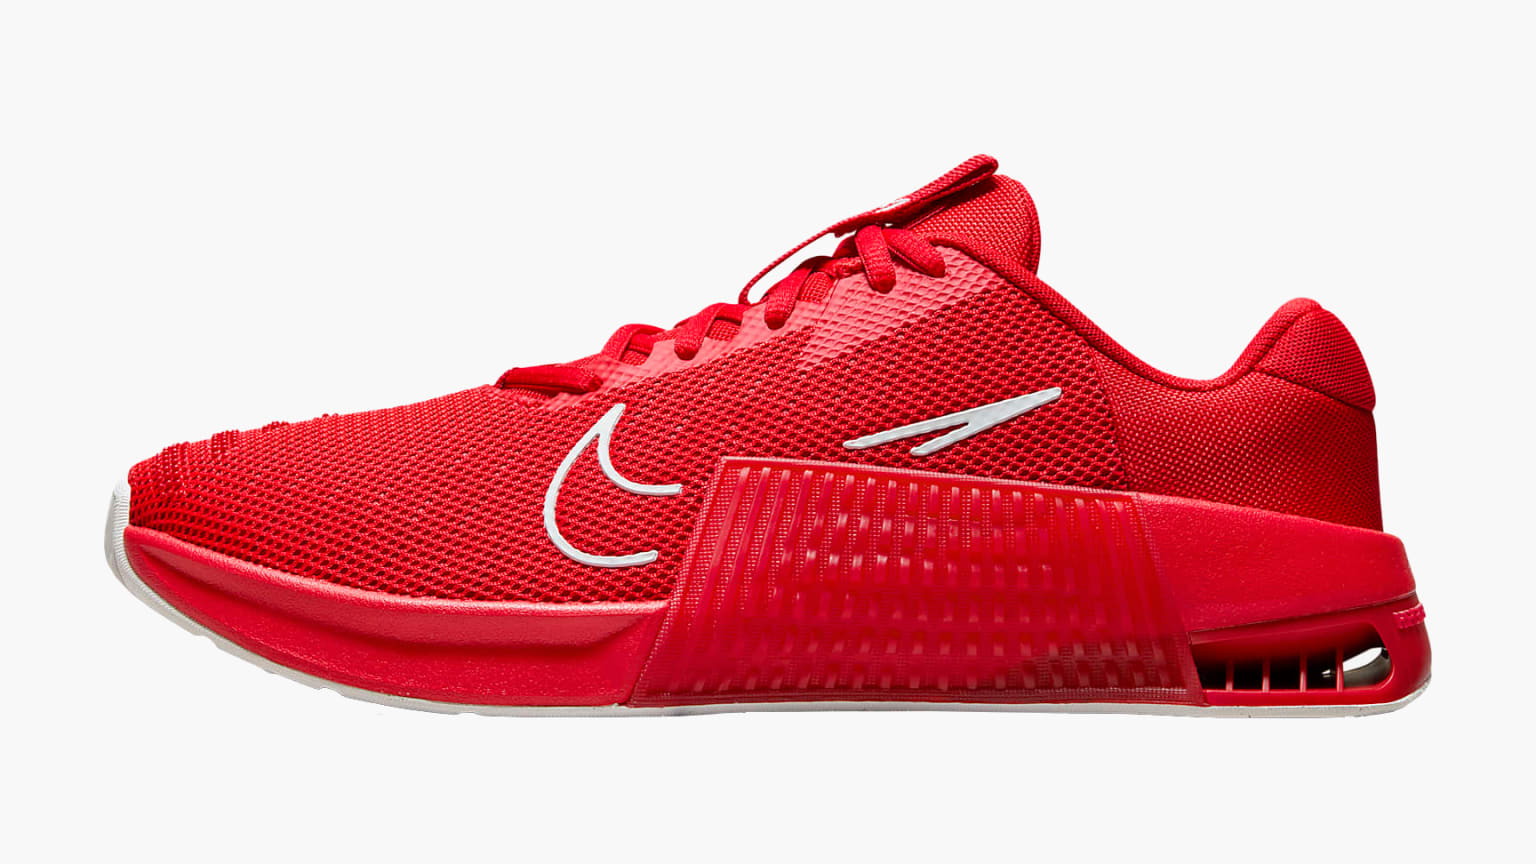 Nike Metcon 9 - Men's - University Red / Gym Red / Pure Platinum